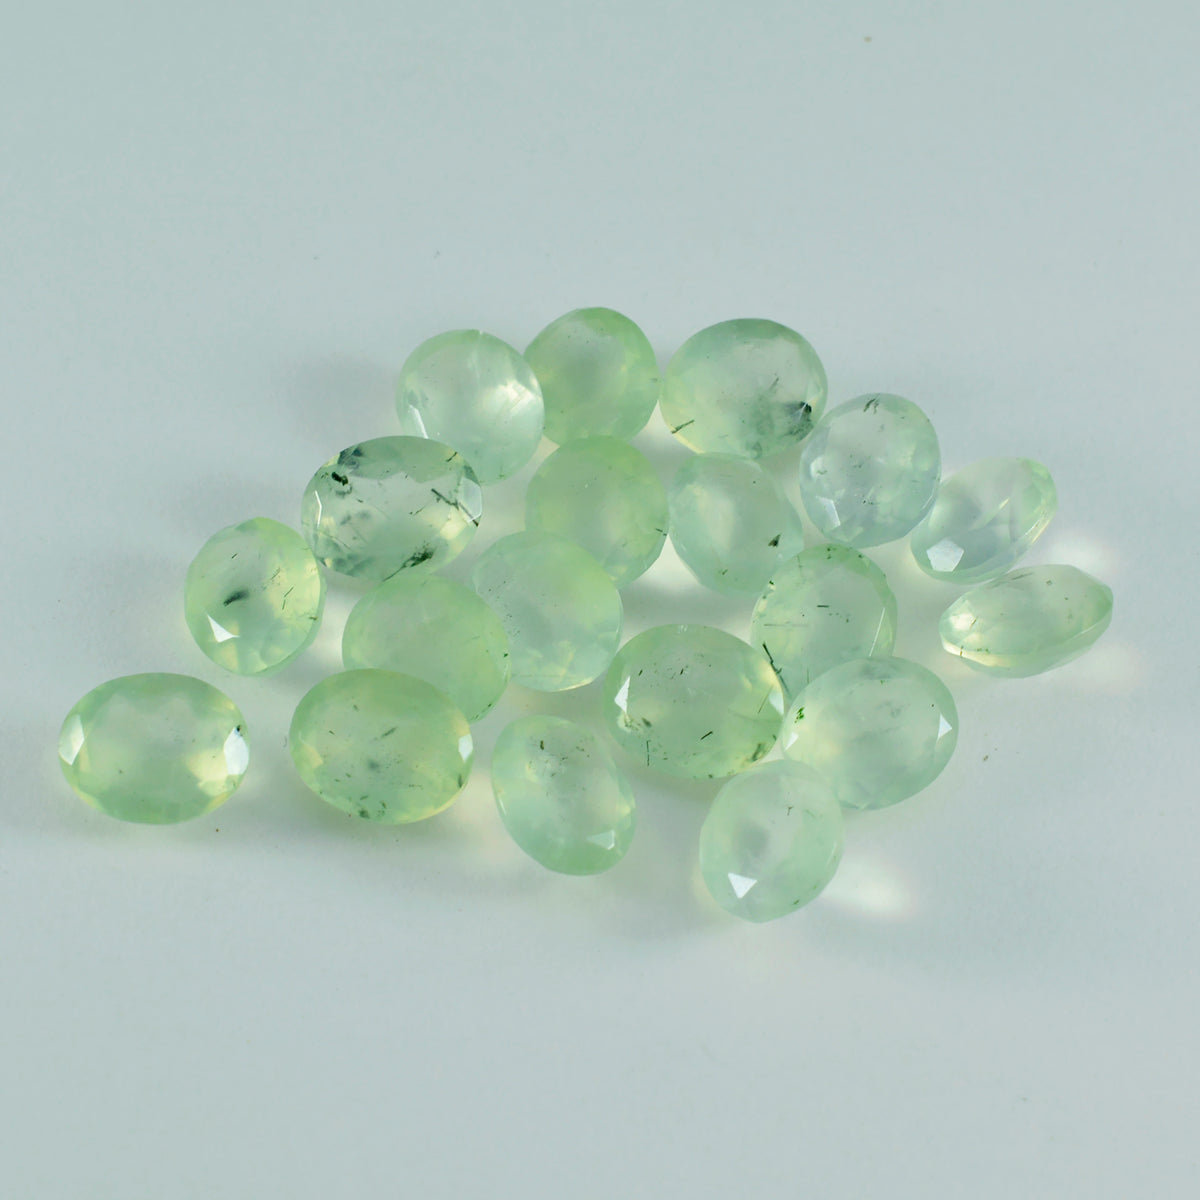 Riyogems 1PC Green Prehnite Faceted 5x7 mm Oval Shape attractive Quality Gemstone